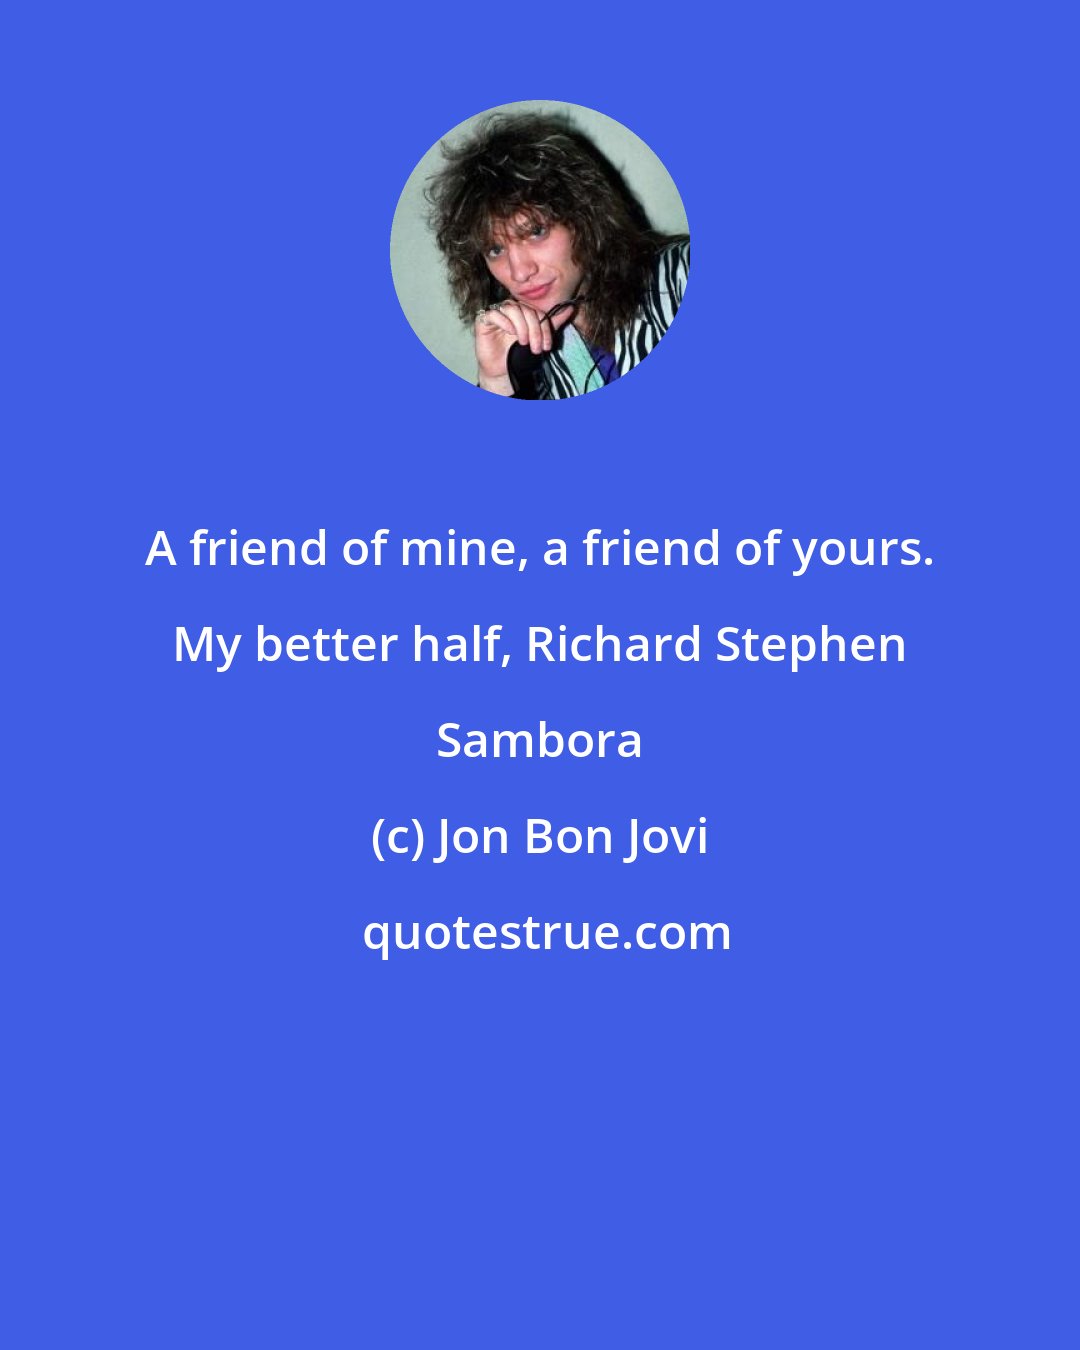 Jon Bon Jovi: A friend of mine, a friend of yours. My better half, Richard Stephen Sambora